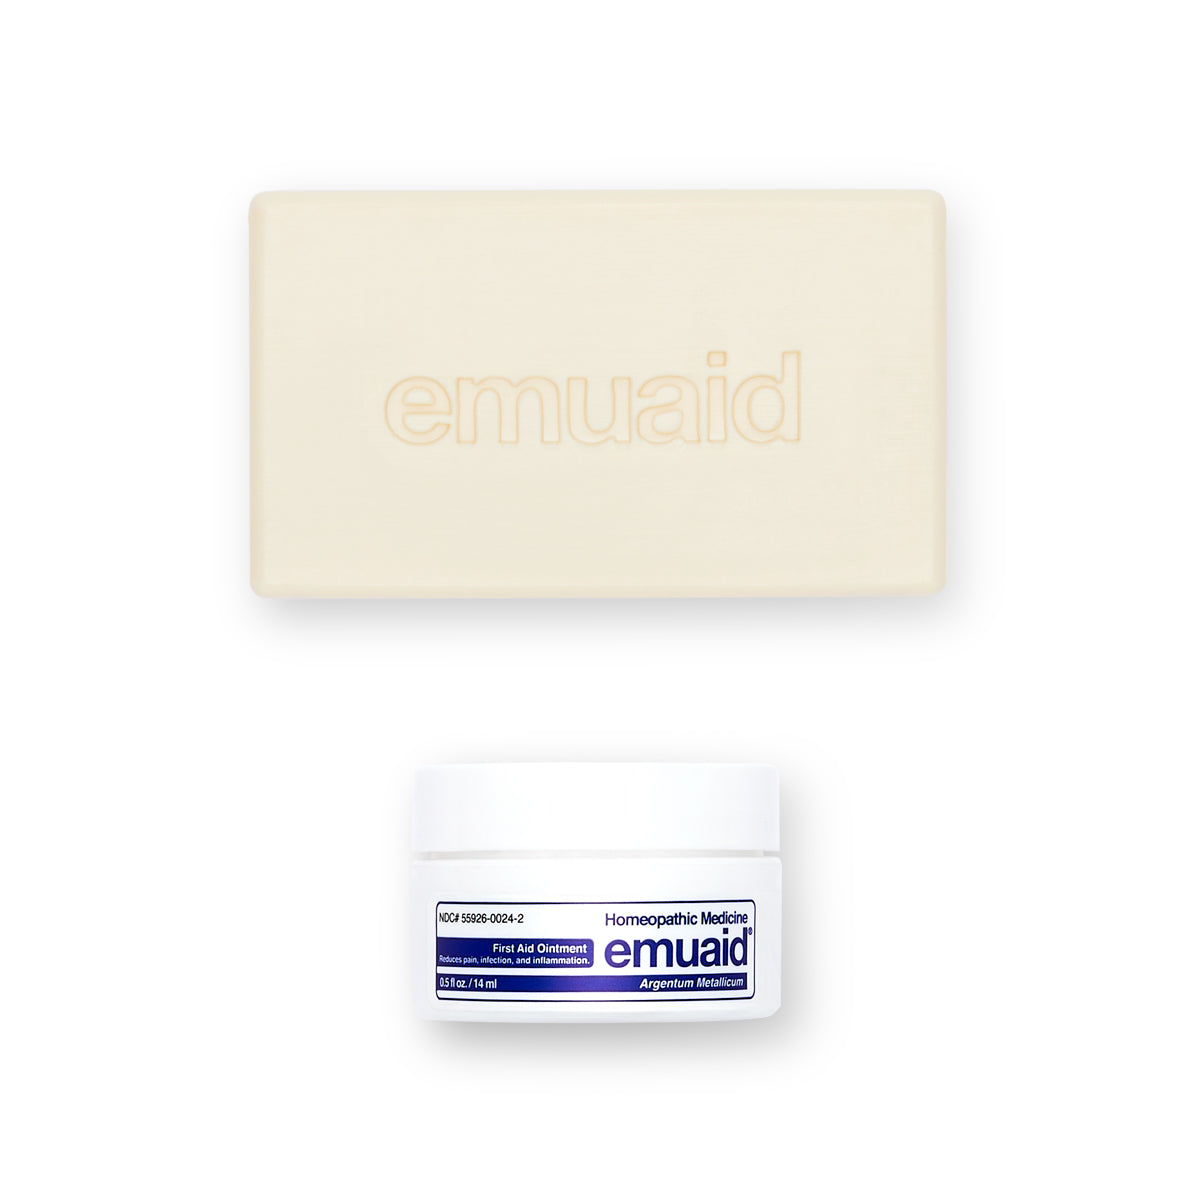 Esta es una foto del EMUAID® Regular First Aid Ointment 0.5oz y del EMUAID® Therapeutic Moisture Bar.  